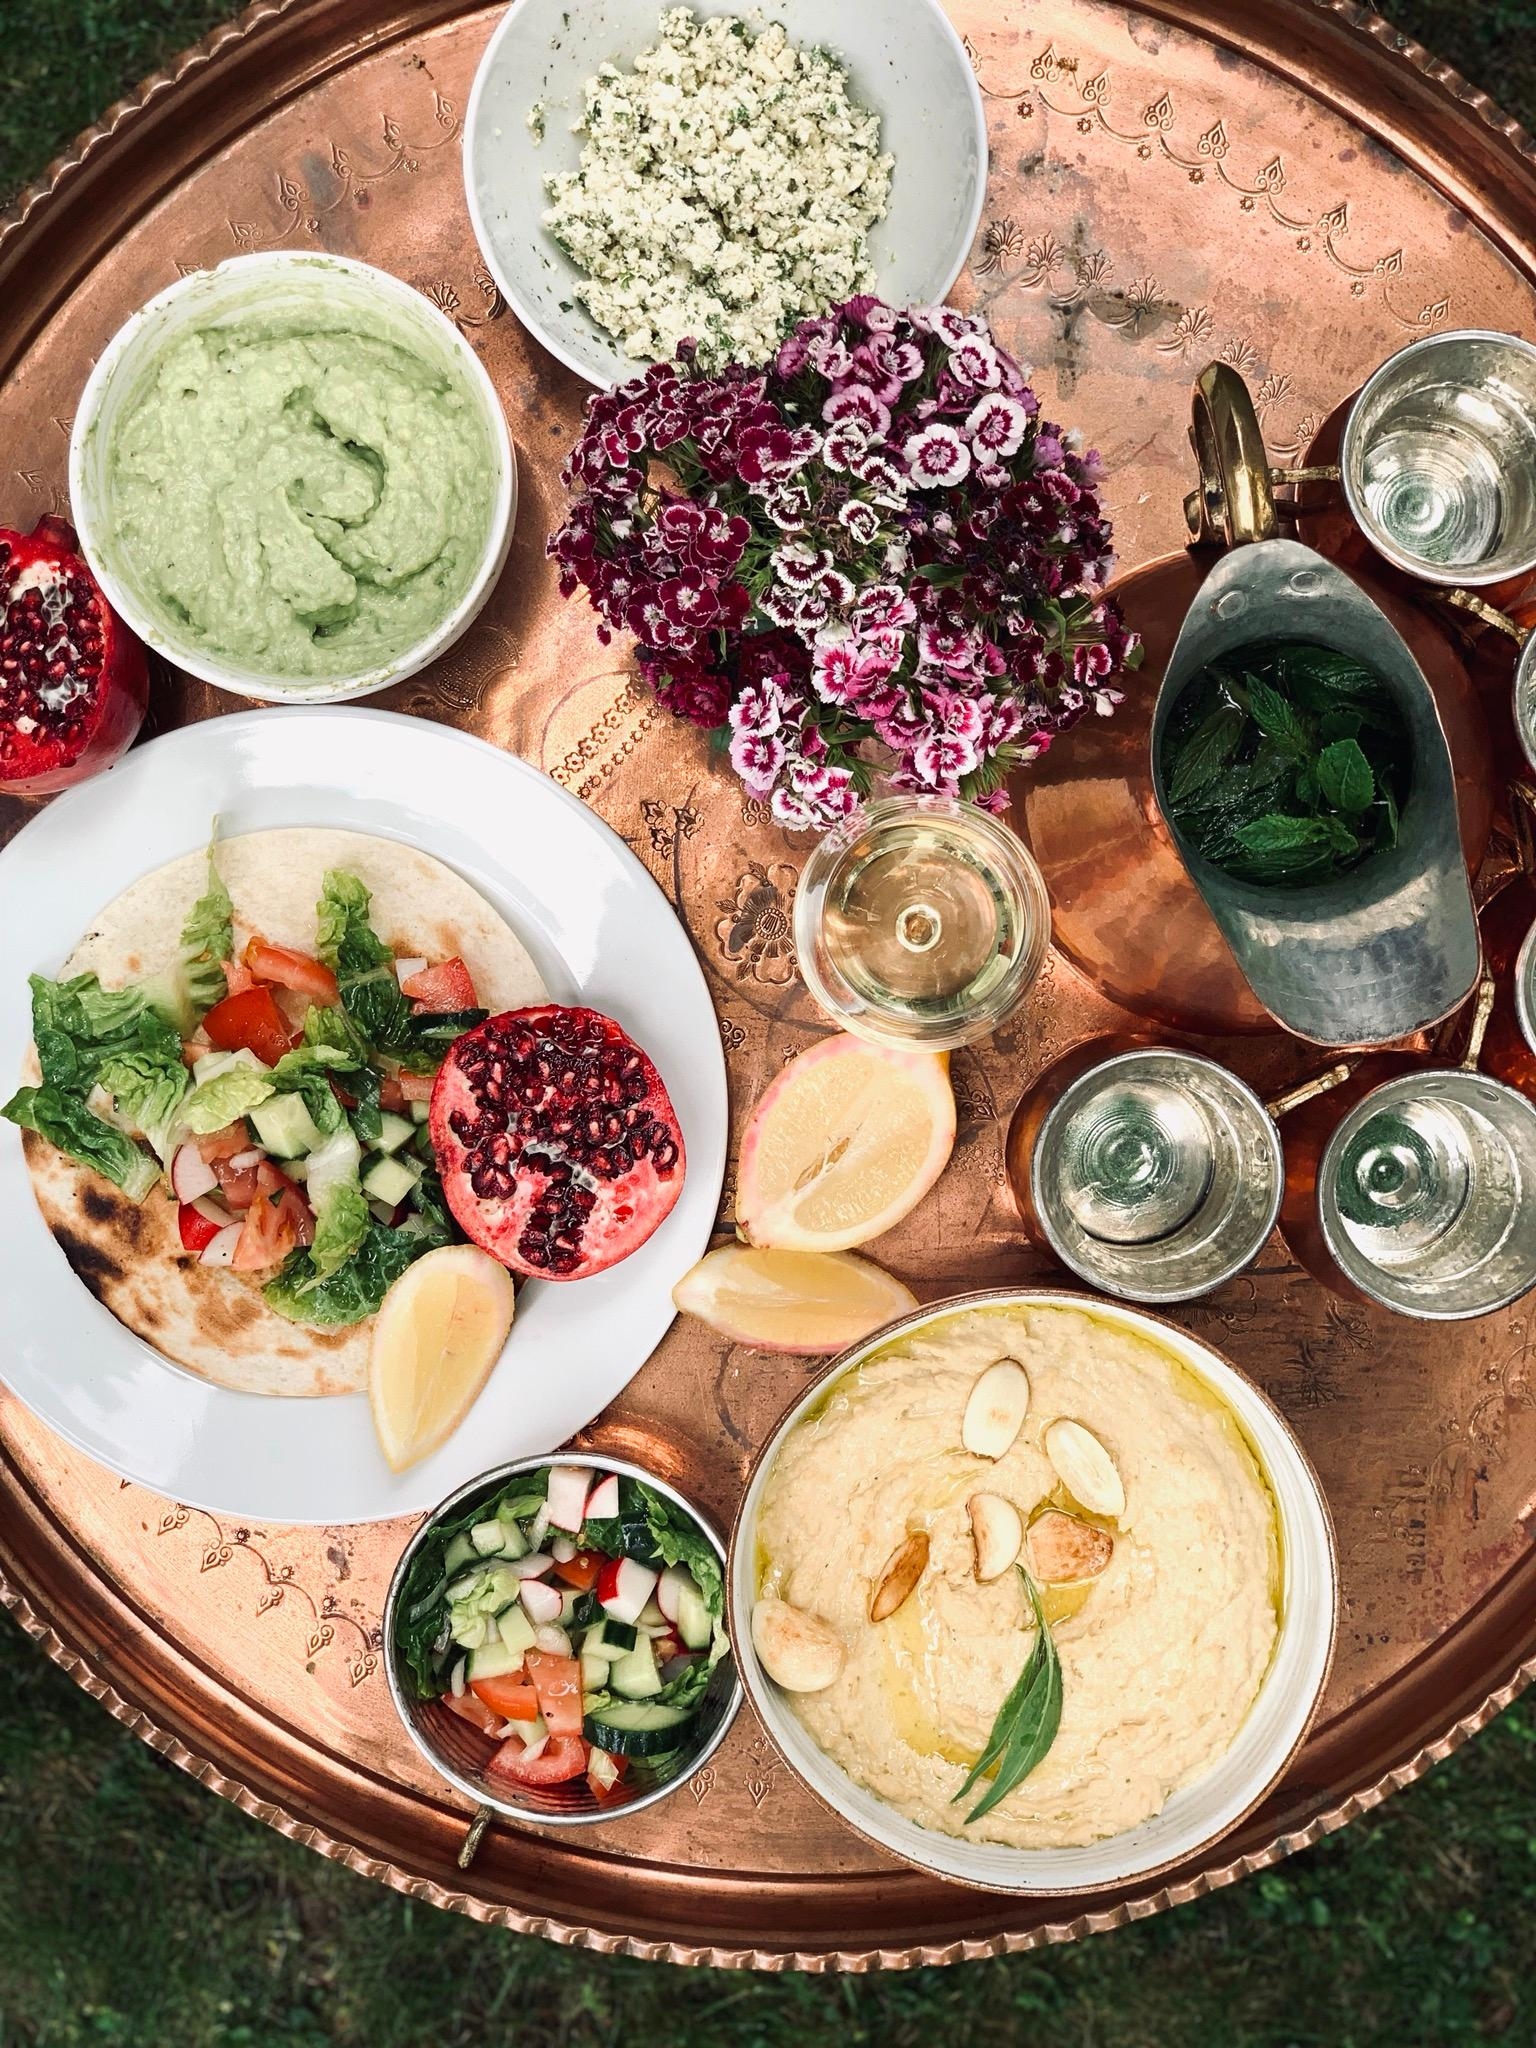 #lunch with Friends. #veggieliebe #greenchallenge #humus #avocadodip #chai #pide #urbangardensalat #couchliebt #homemade